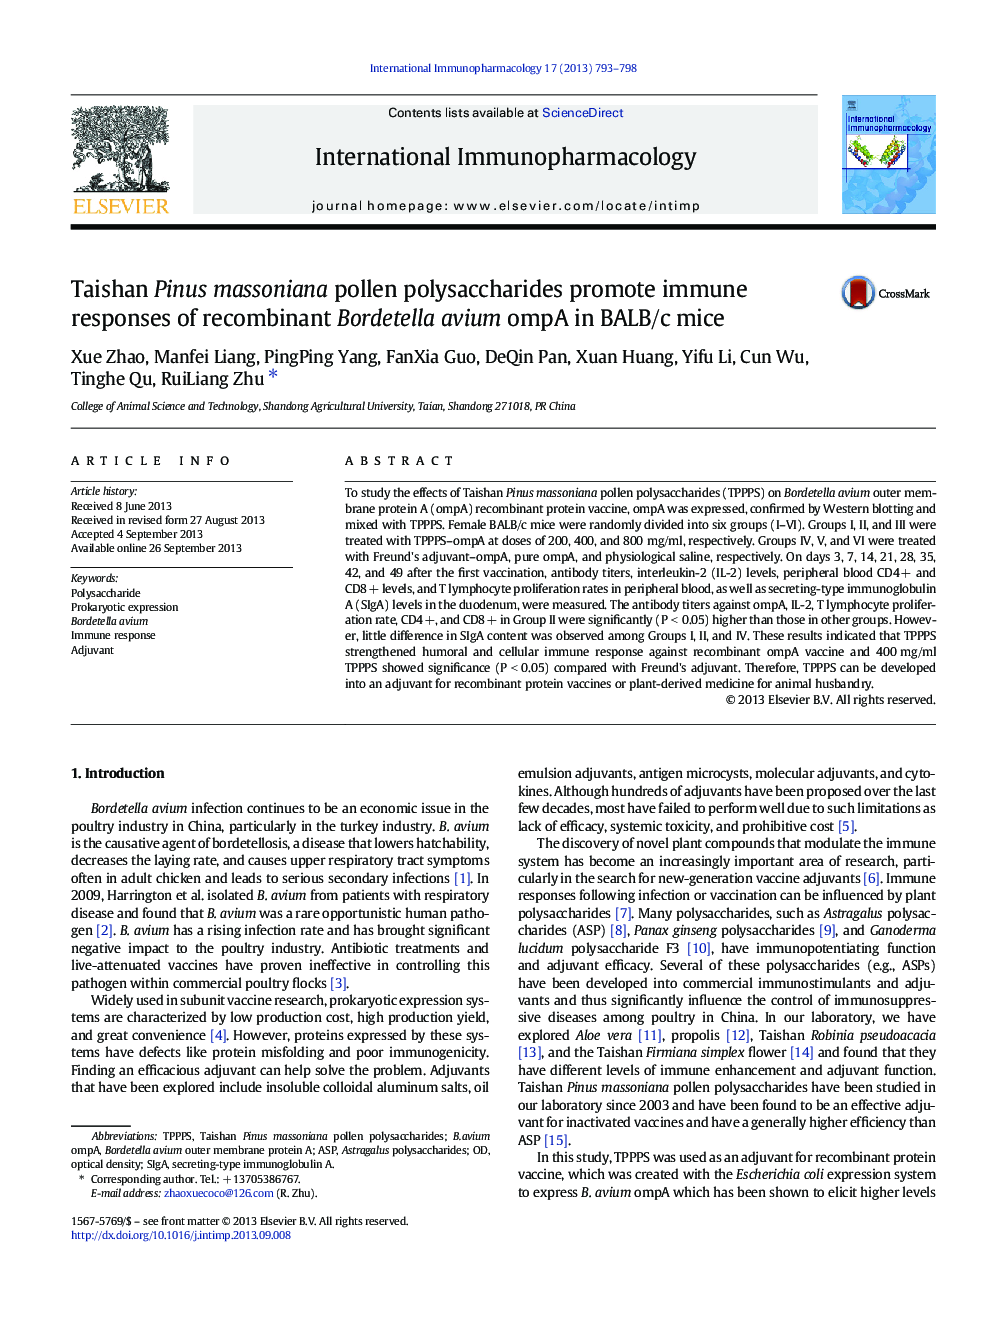 Taishan Pinus massoniana pollen polysaccharides promote immune responses of recombinant Bordetella avium ompA in BALB/c mice